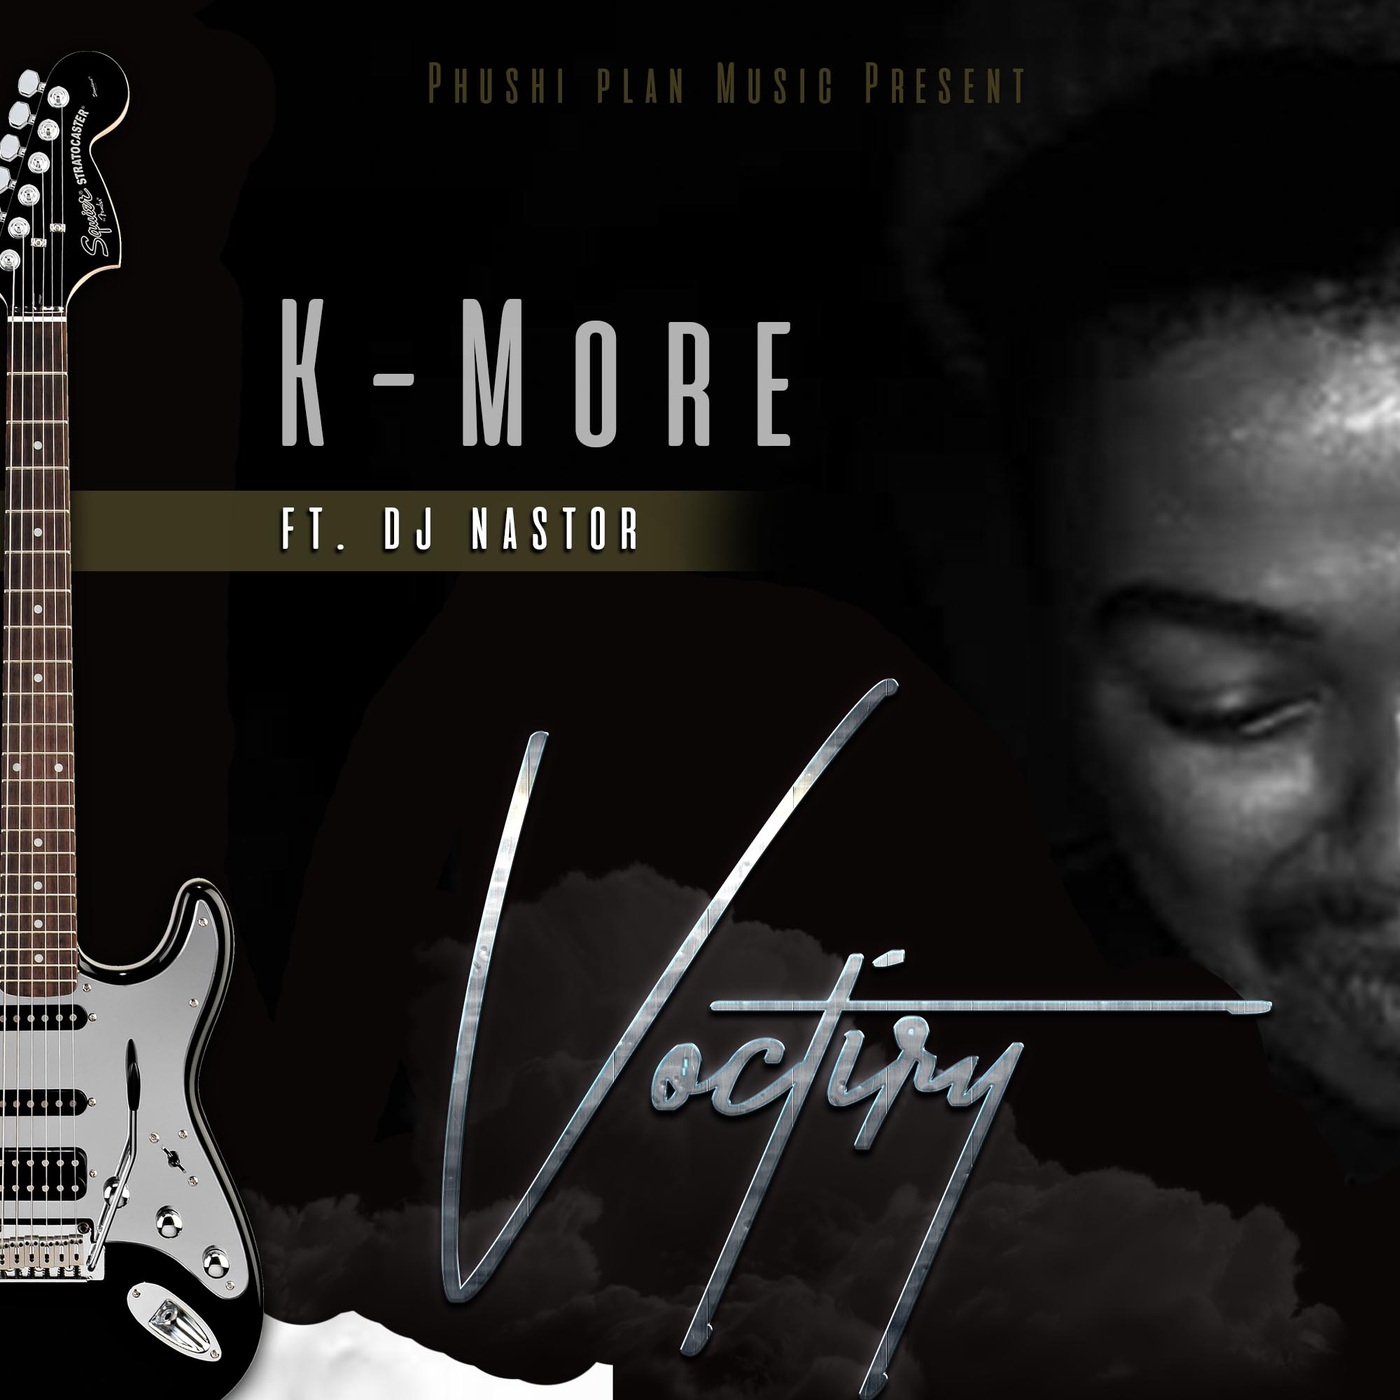 K More feat. Dj Nastor - Victory / Phushi Plan music